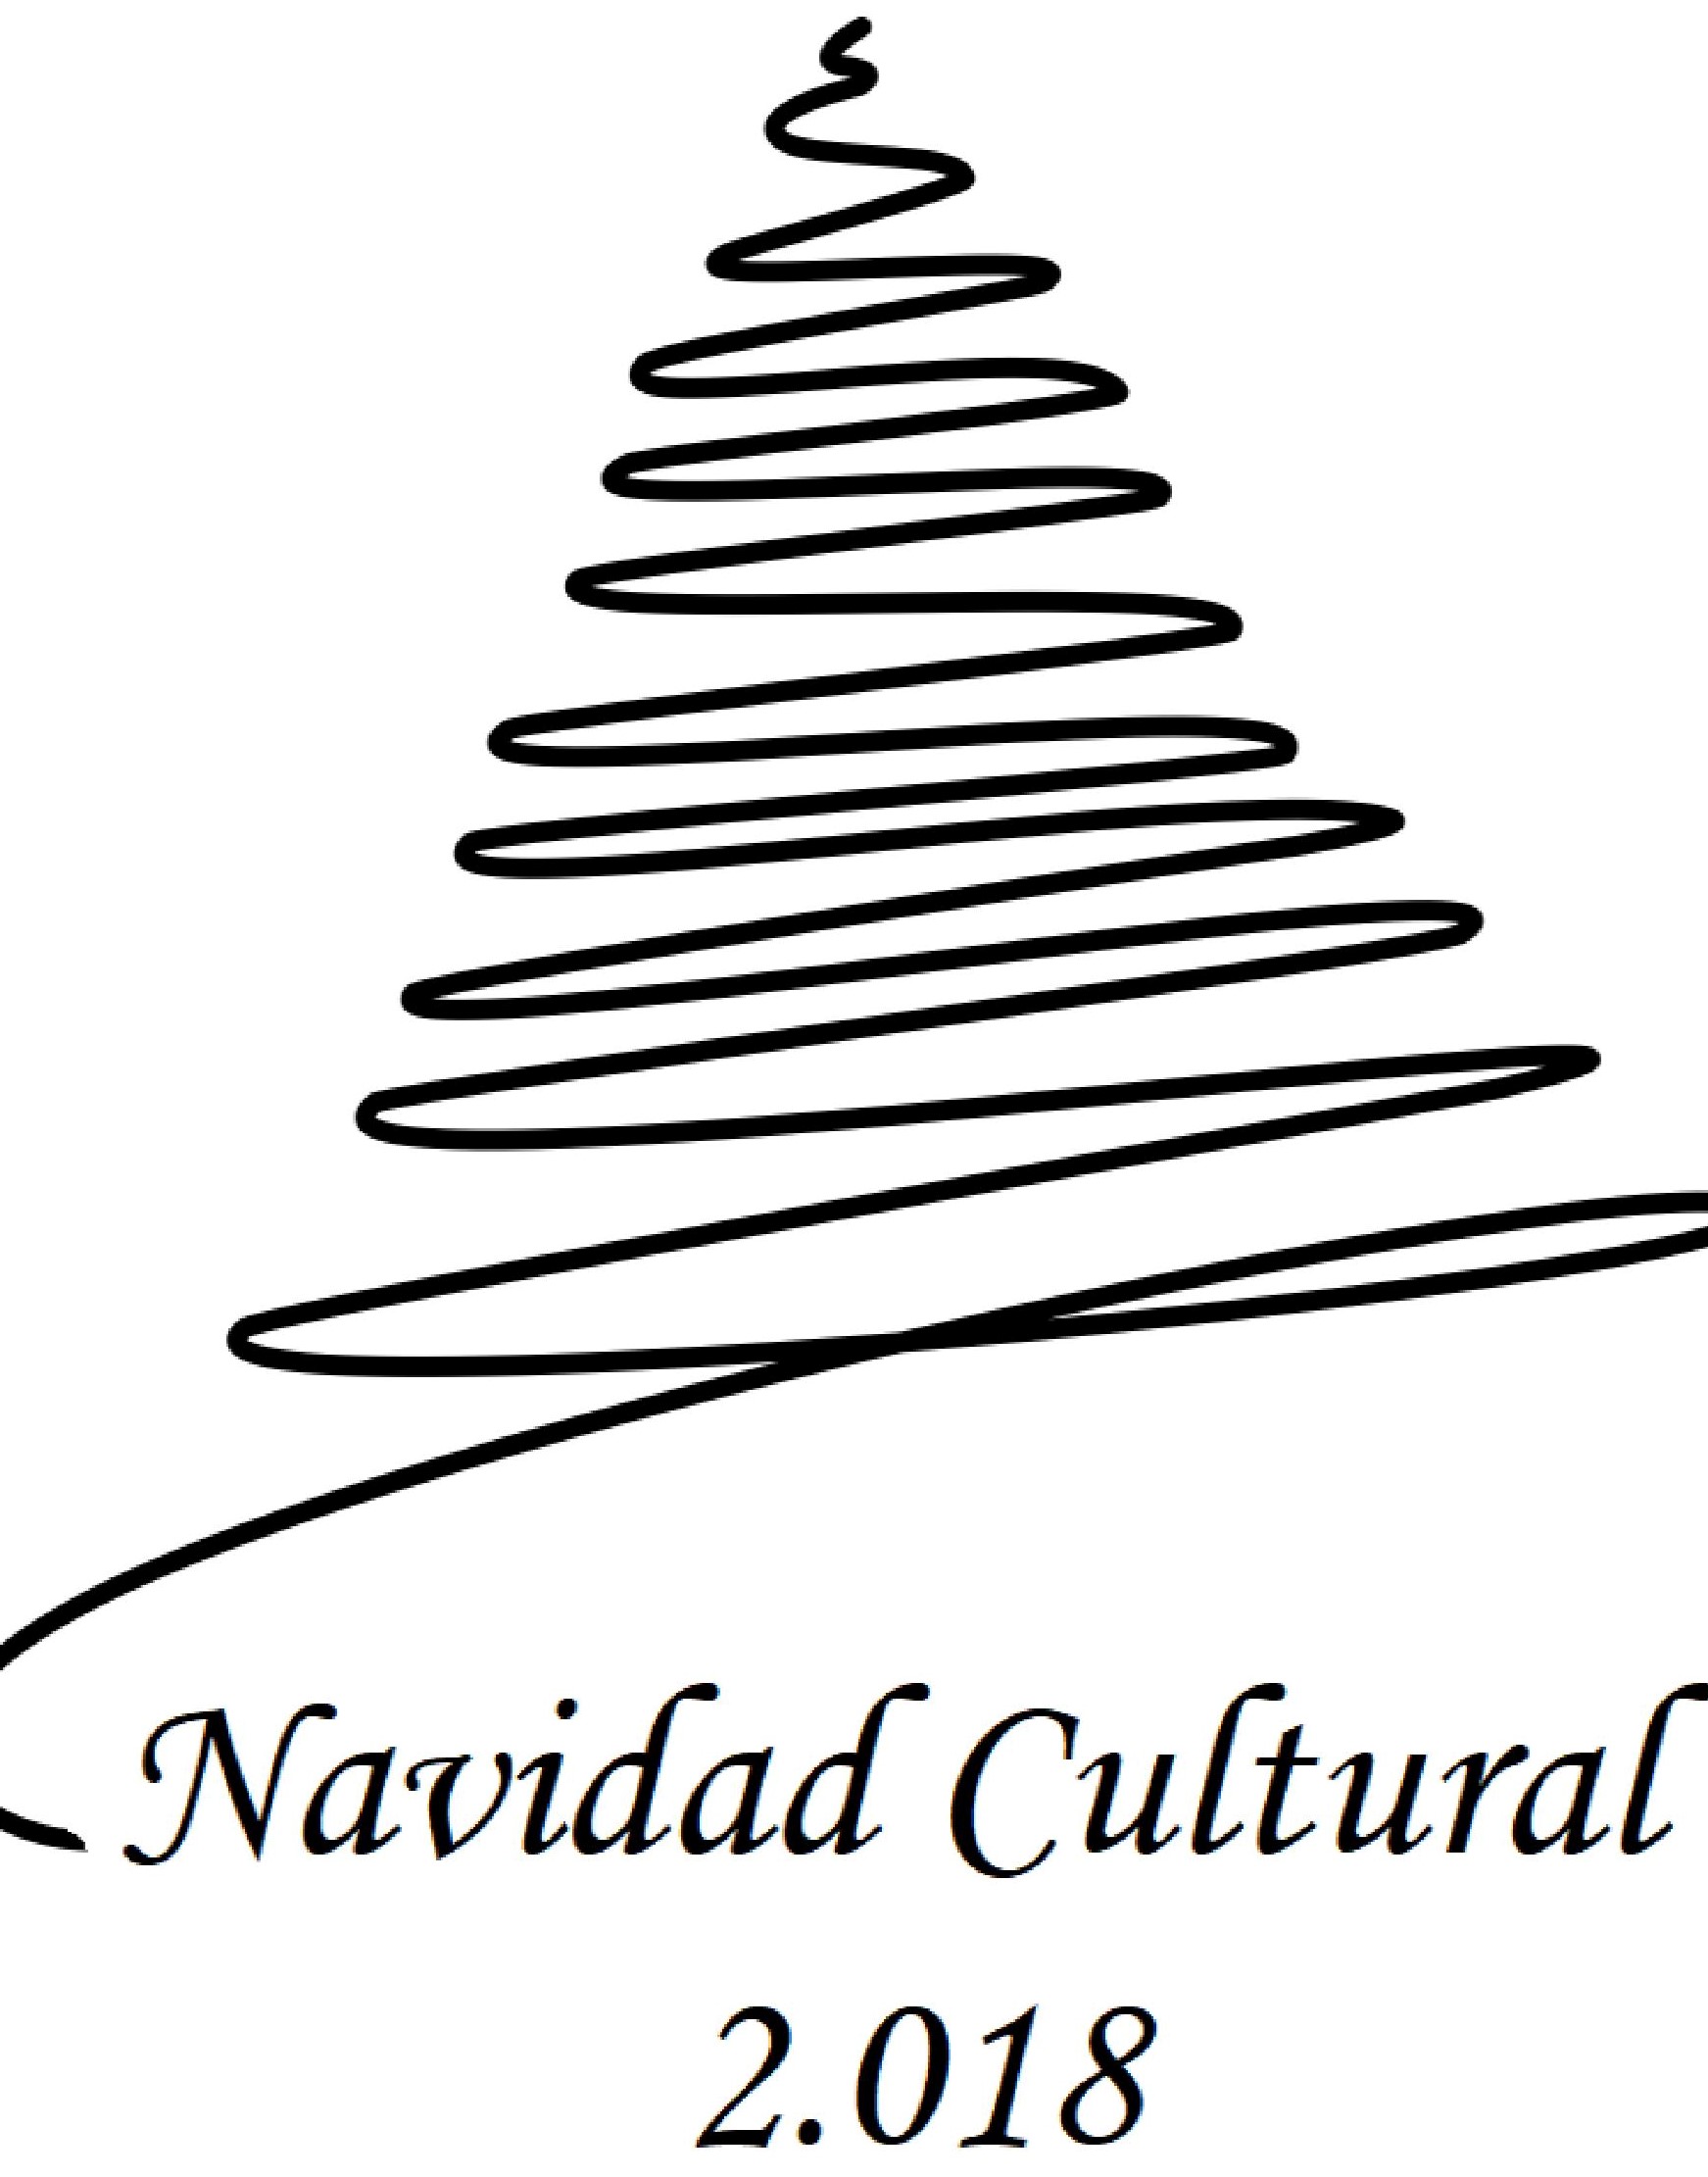 Navidad cultural Maluenda 2018